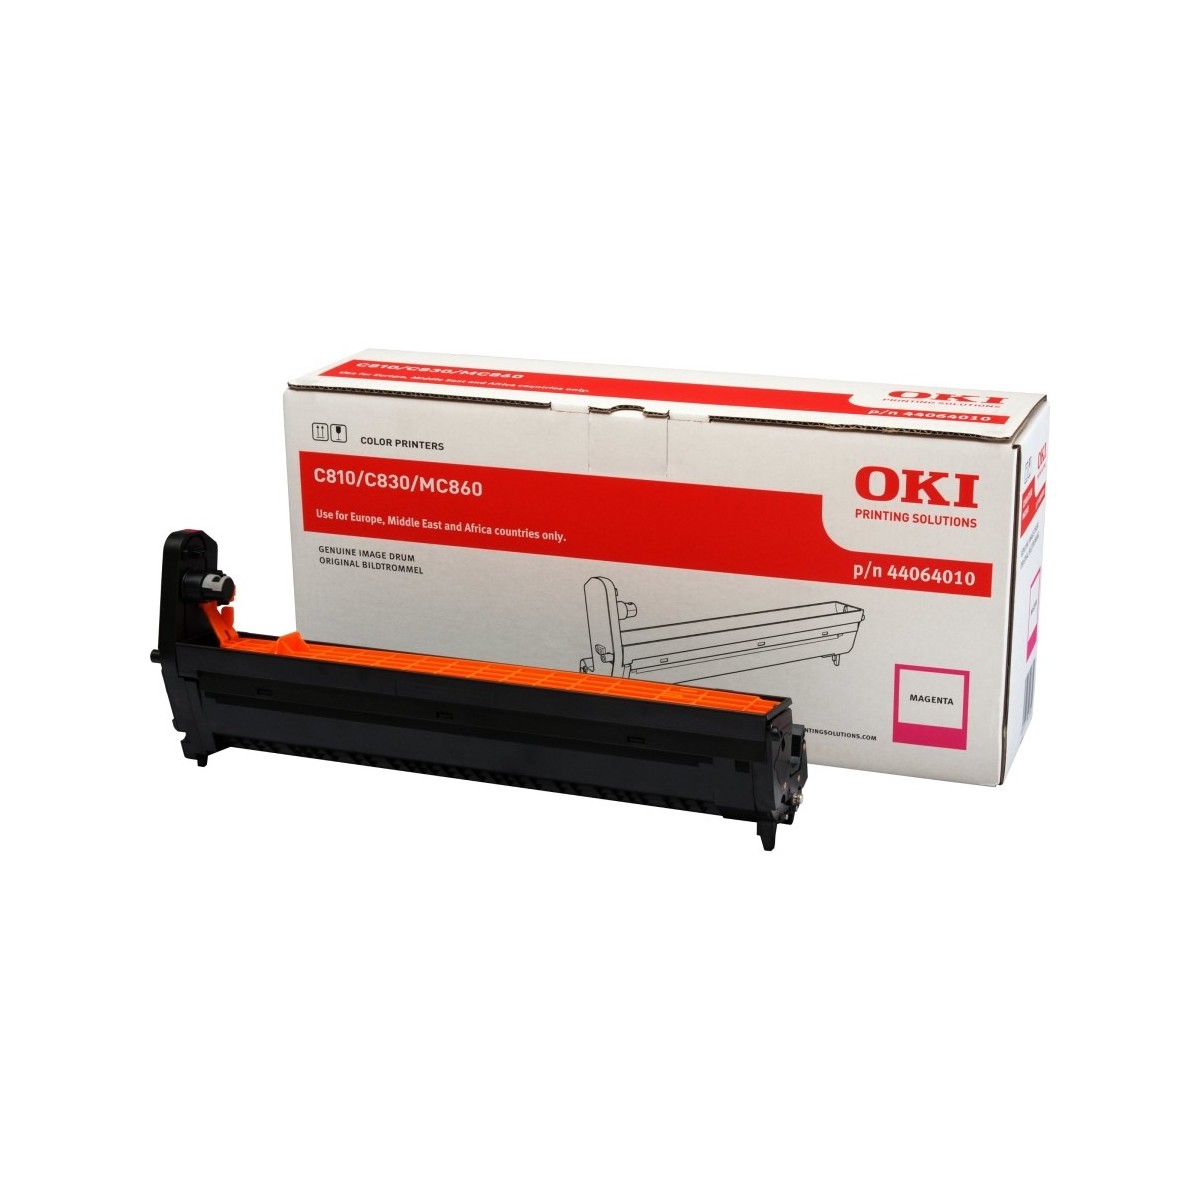 OKI 44064010 - Original - C810/C830/MC860 - 20000 pages - Laser printing - Magenta - Black